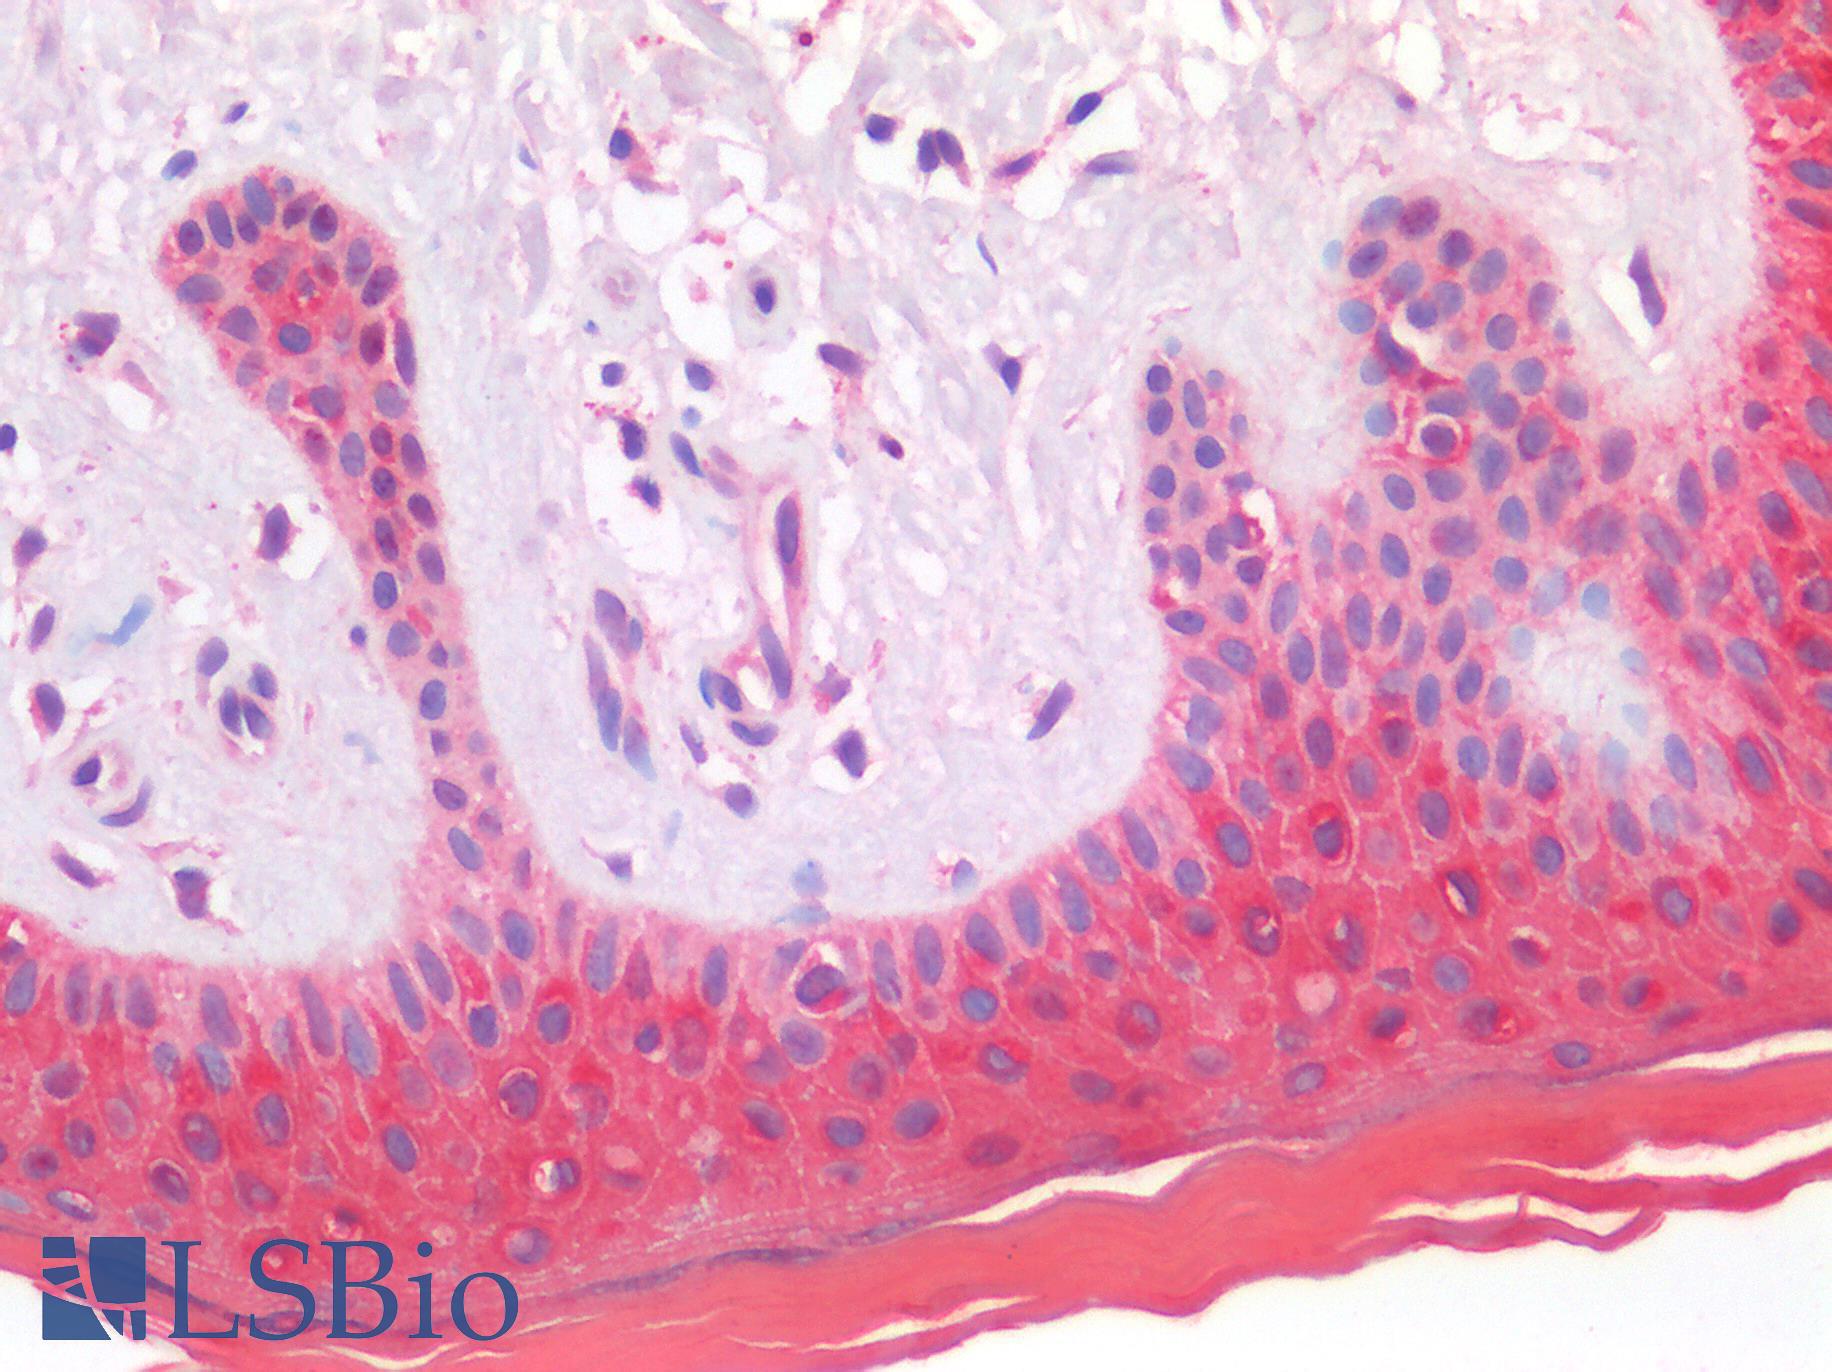 S100A8 / MRP8 Antibody - Human Skin: Formalin-Fixed, Paraffin-Embedded (FFPE)